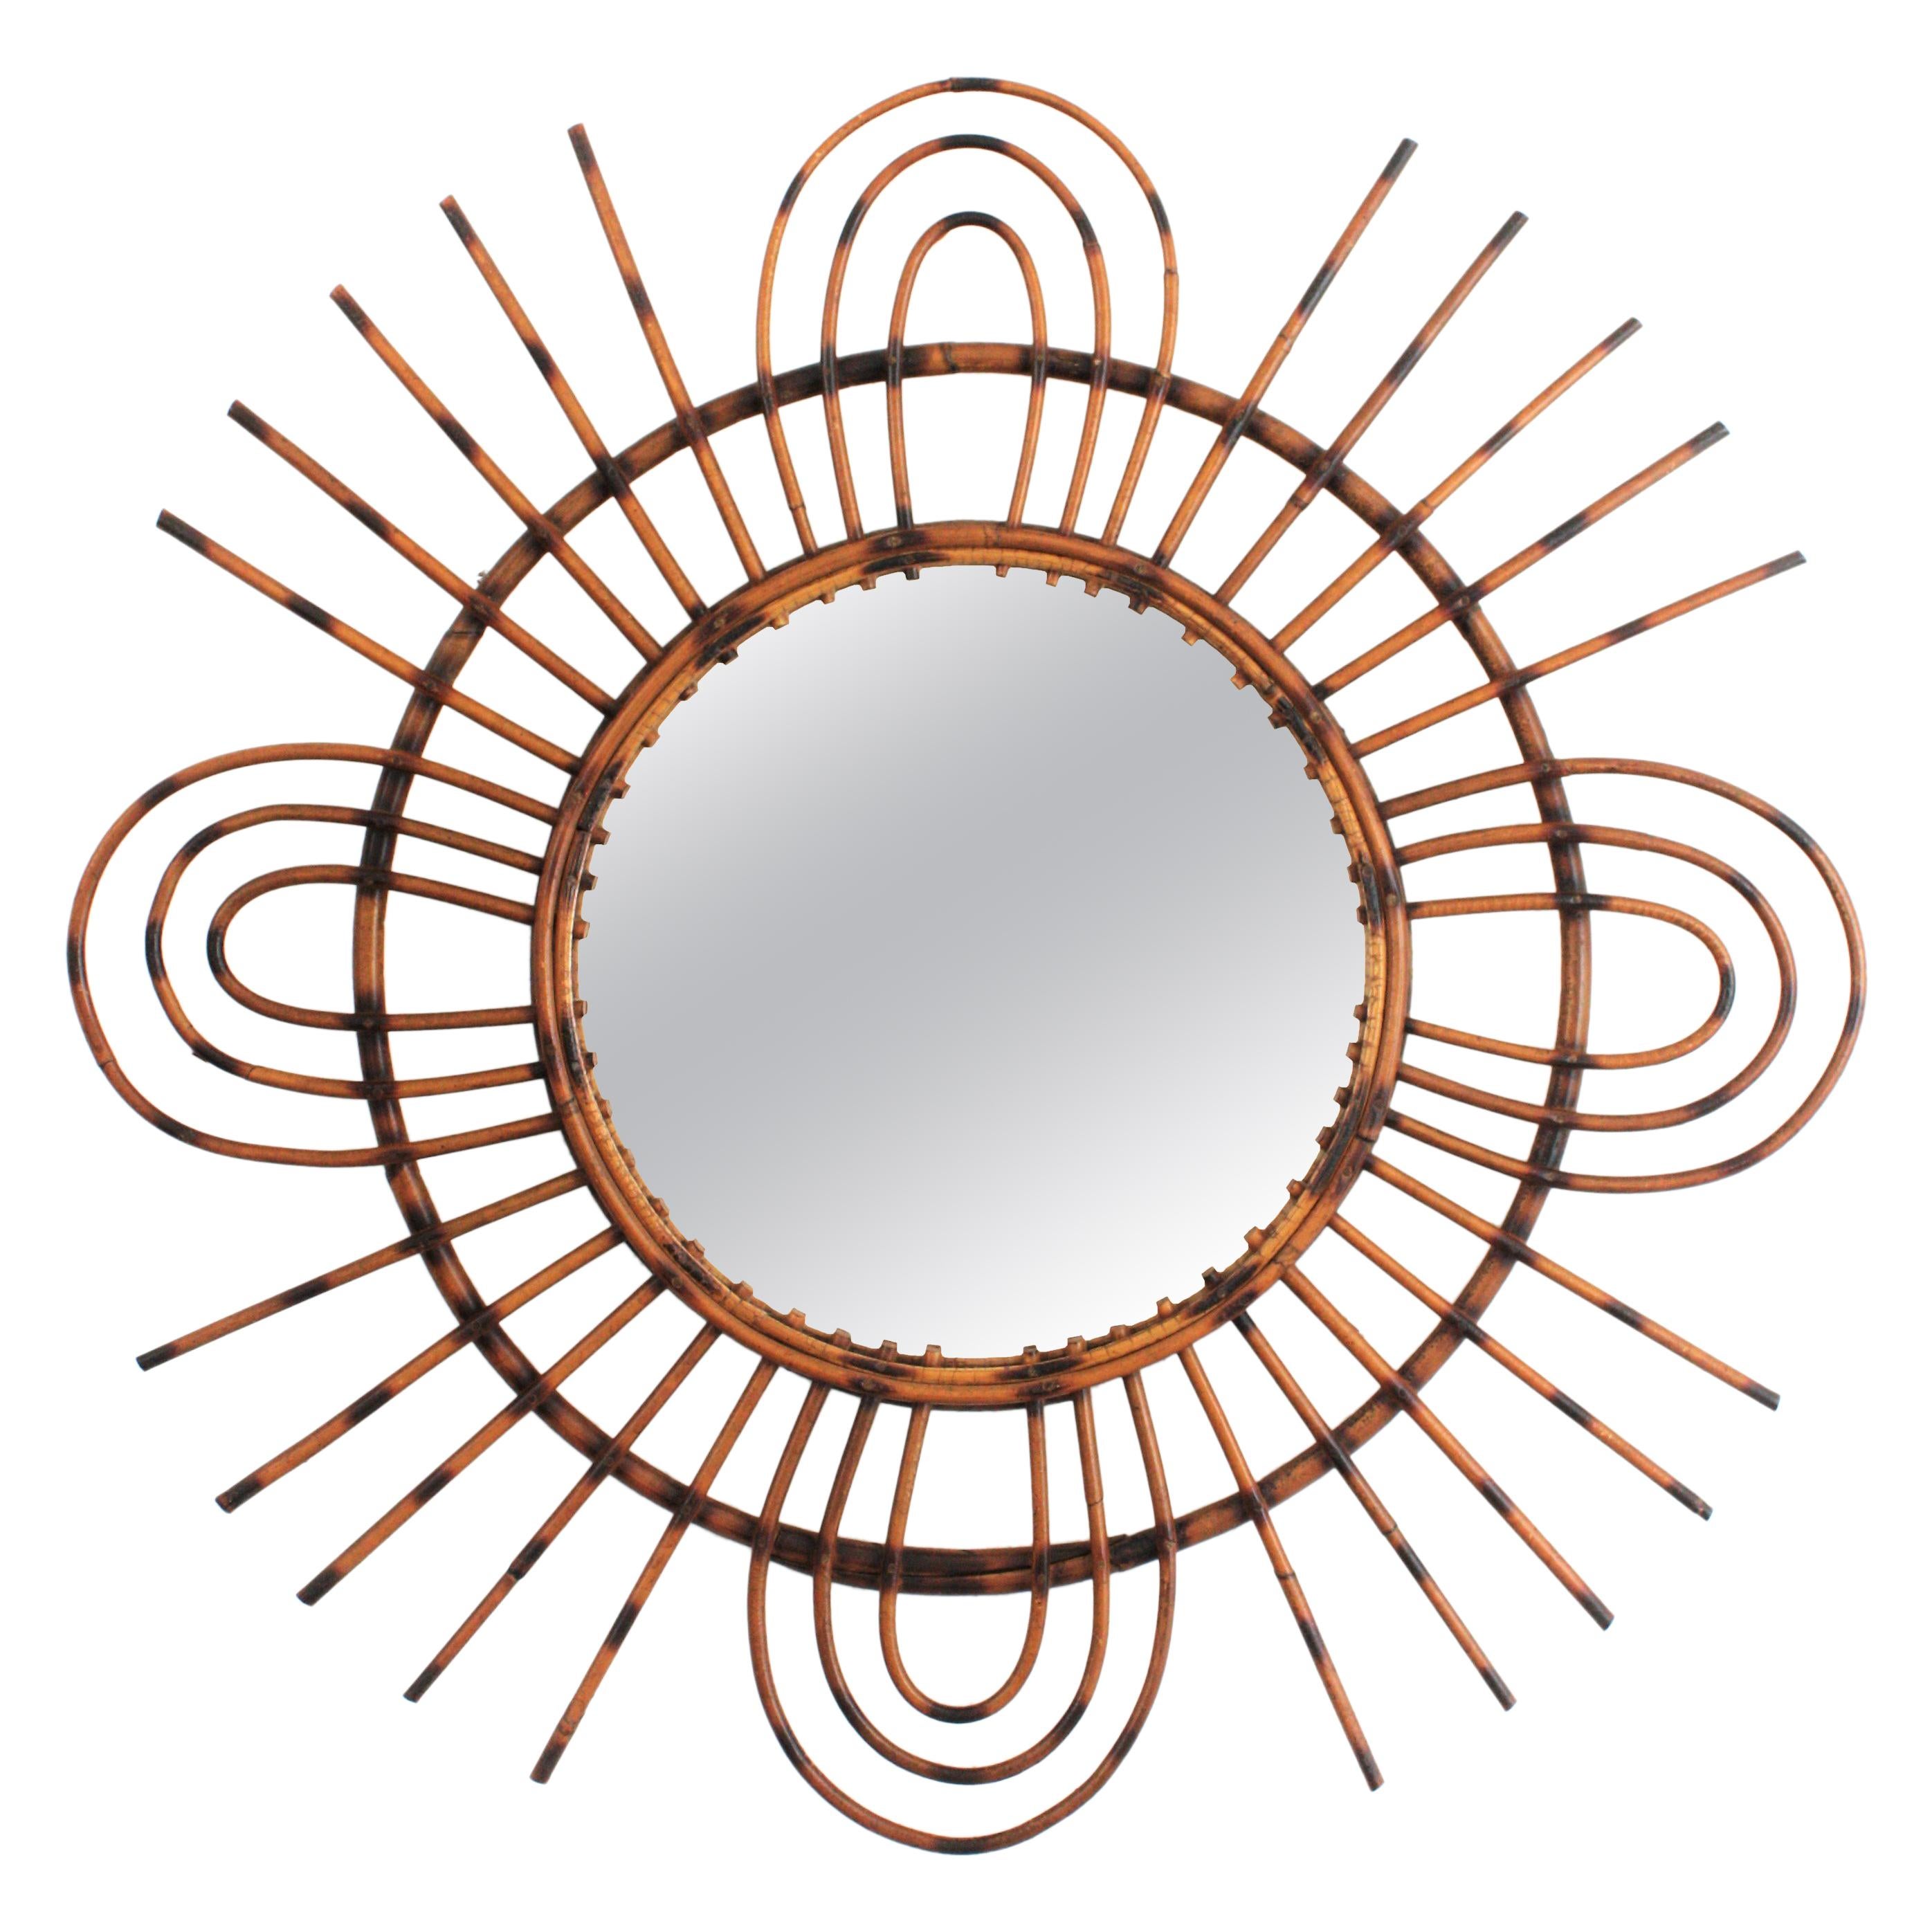 1960s French Riviera Midcentury Rattan Sunburst Mirror with Triple Petals